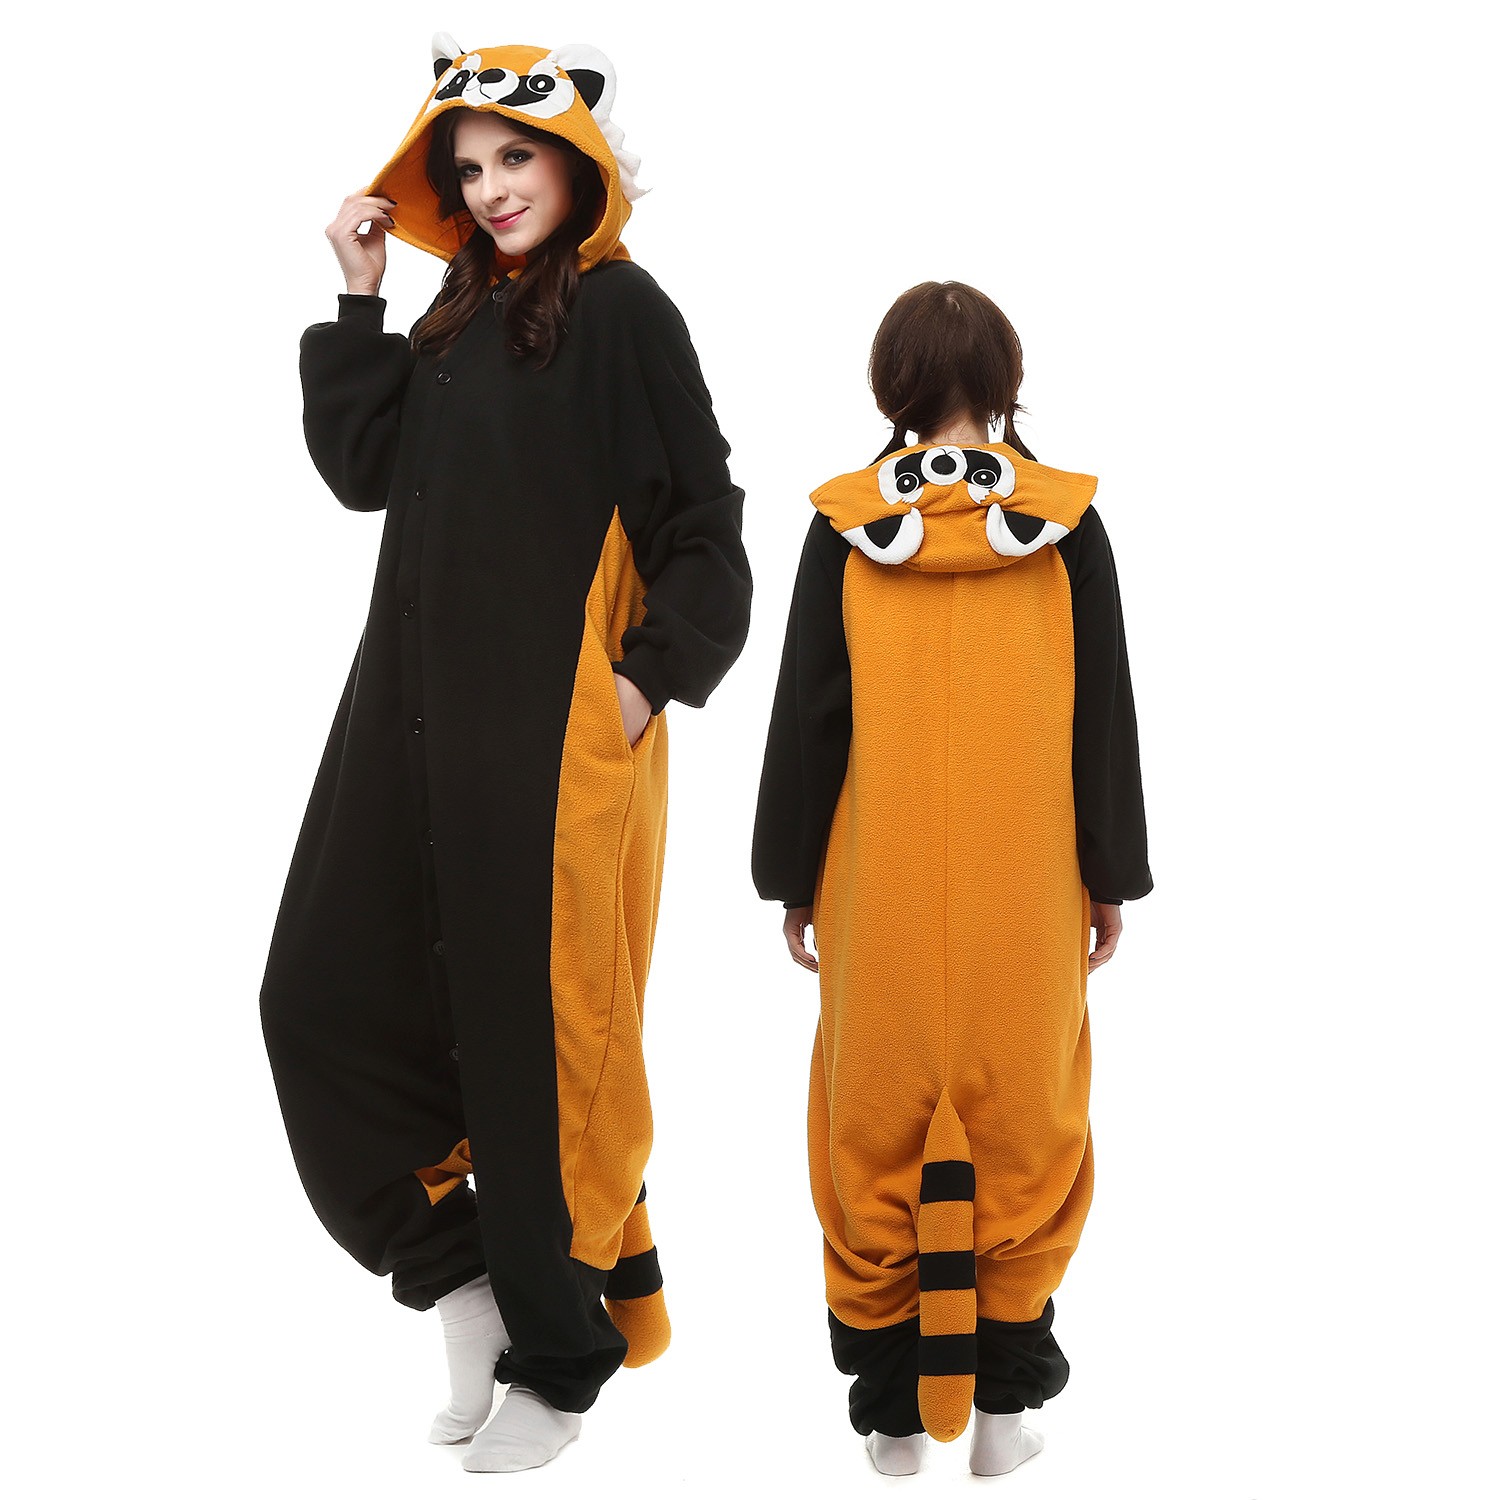 Raccoon Red Panda Costume Kigurumi Anime Cosplay Pyjamas Onesie12 Fancy Dress UK 